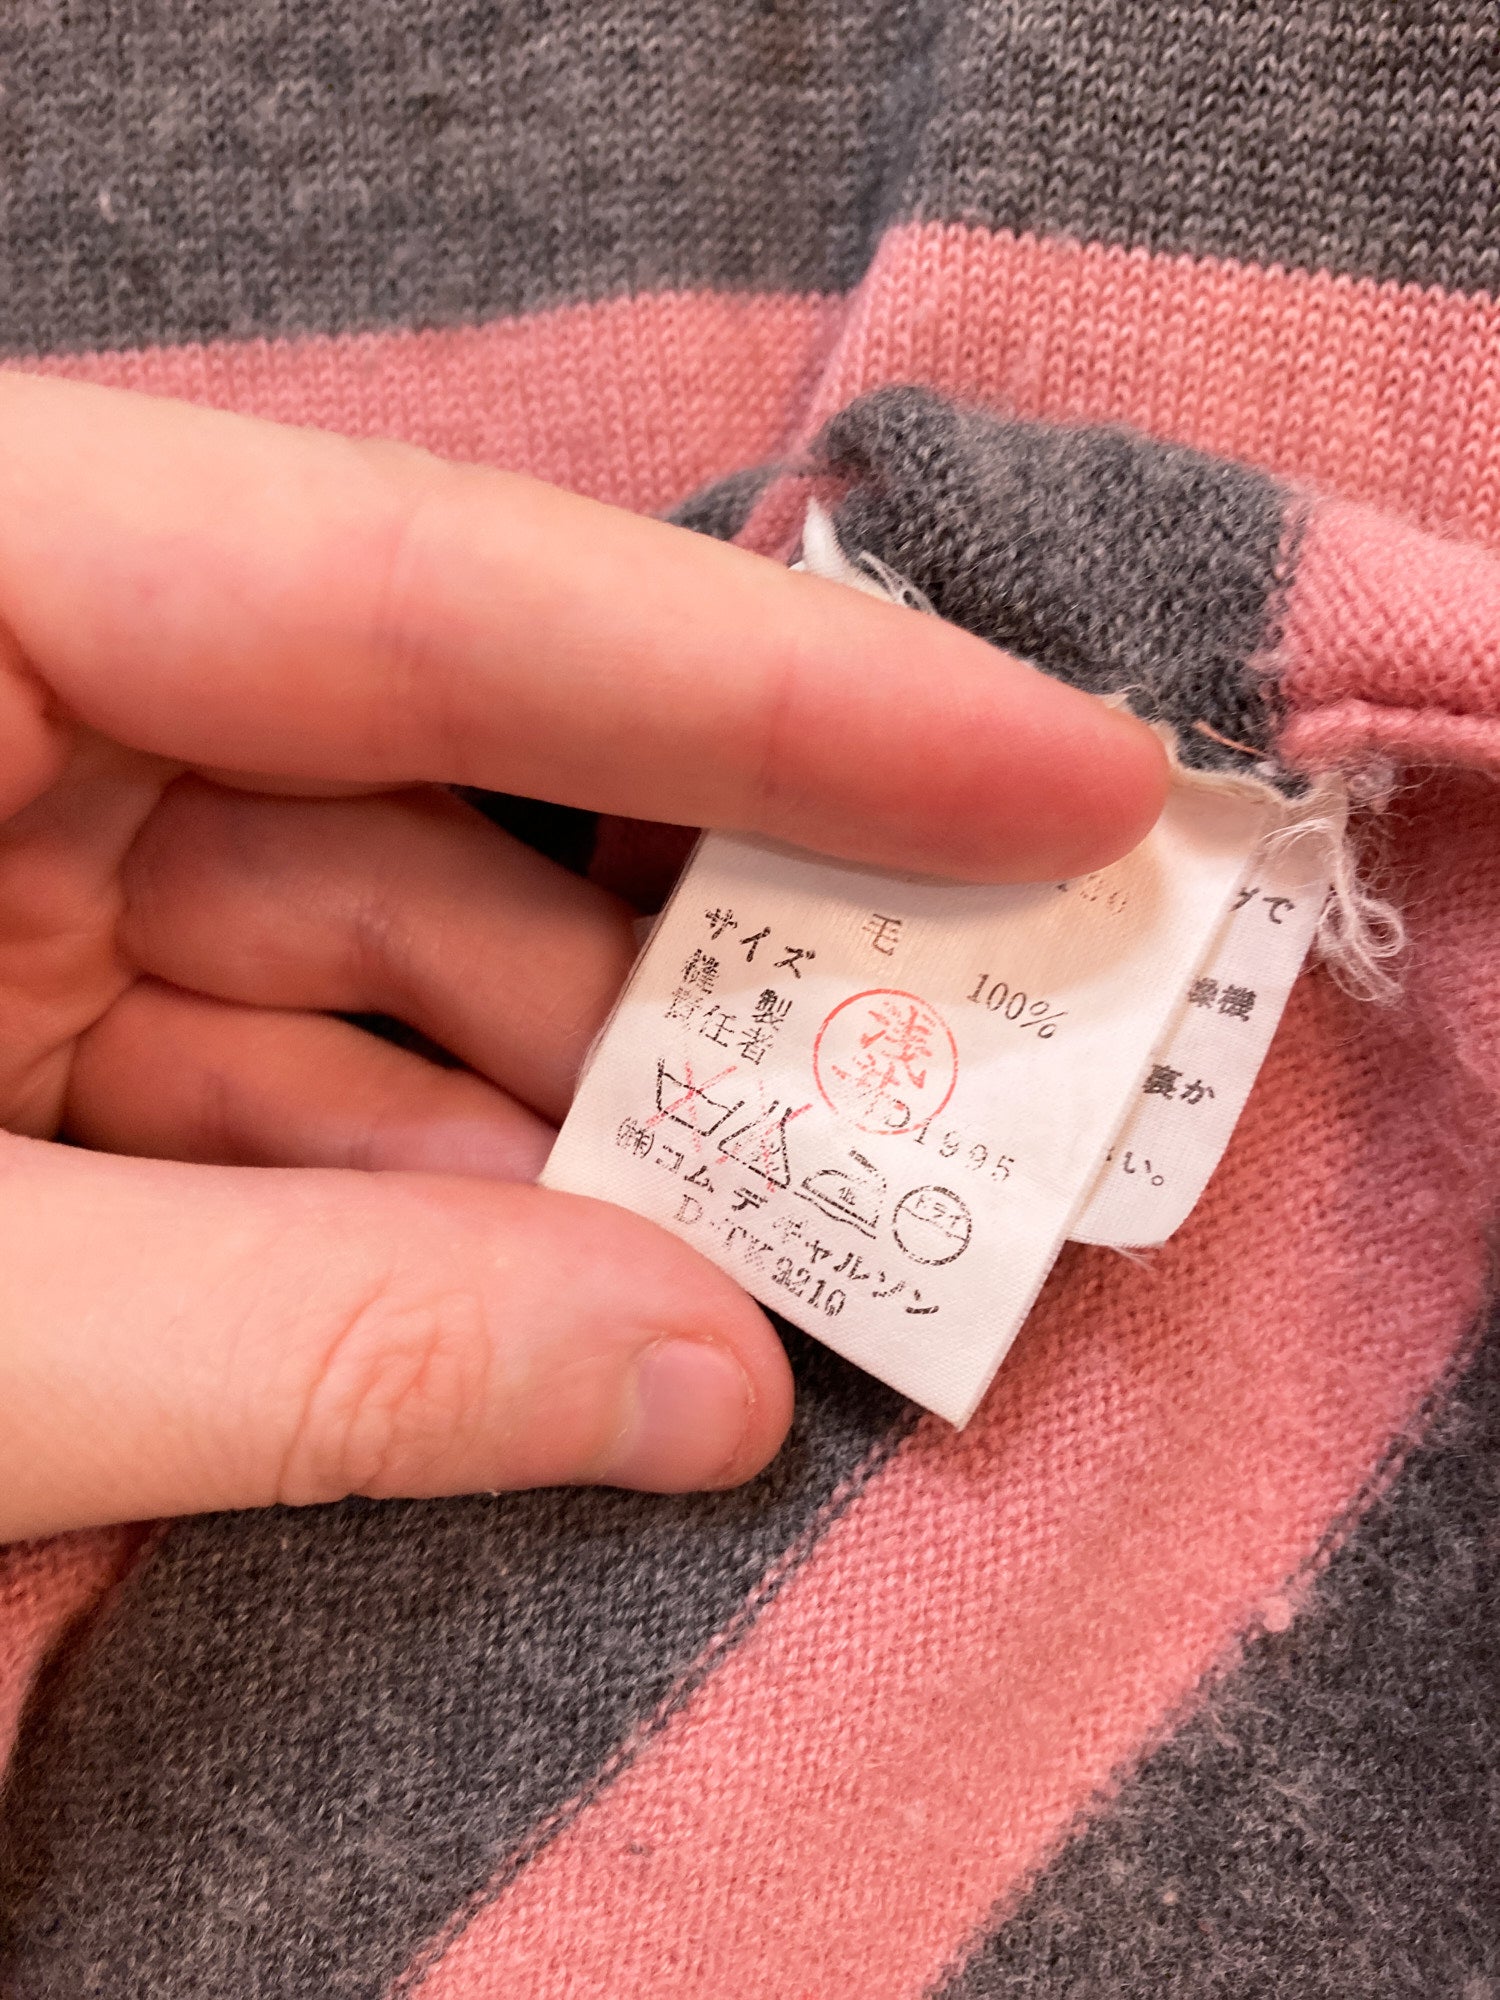 Robe de Chambre Comme des Garcons SS1996 pink grey striped wool t-shirt - S XS